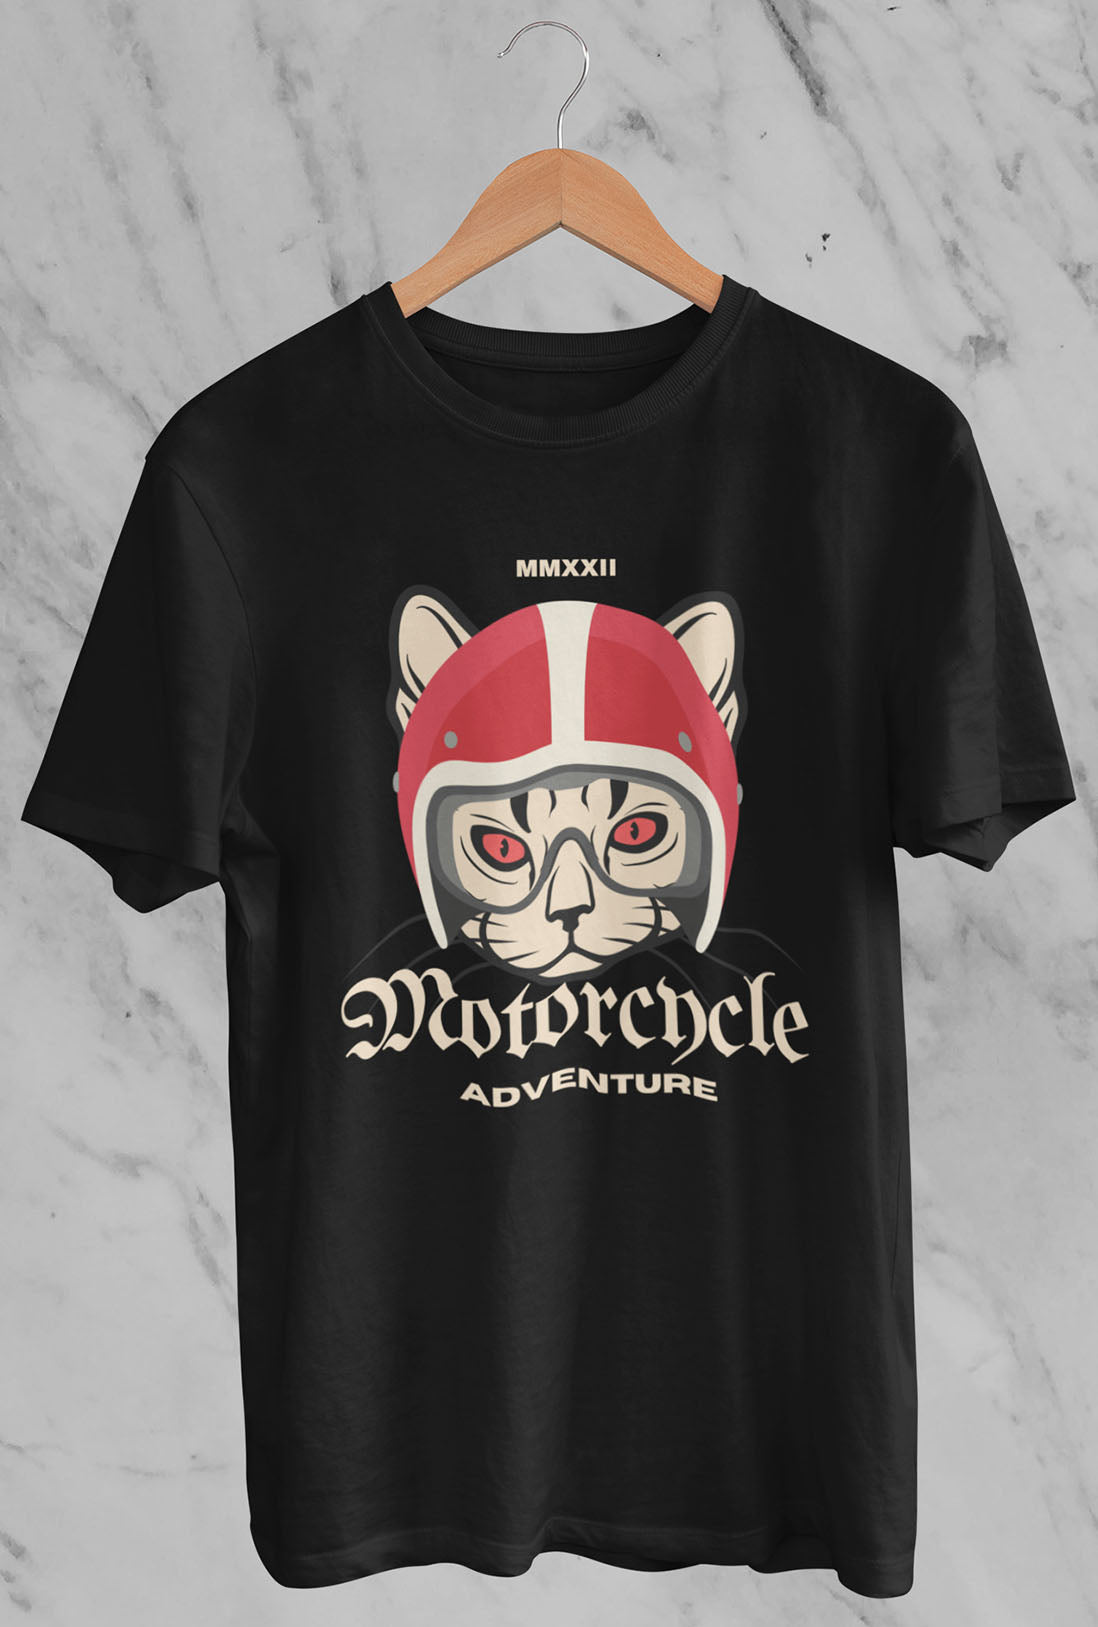 Motorcycle Adventure Men's Cotton T-Shirt